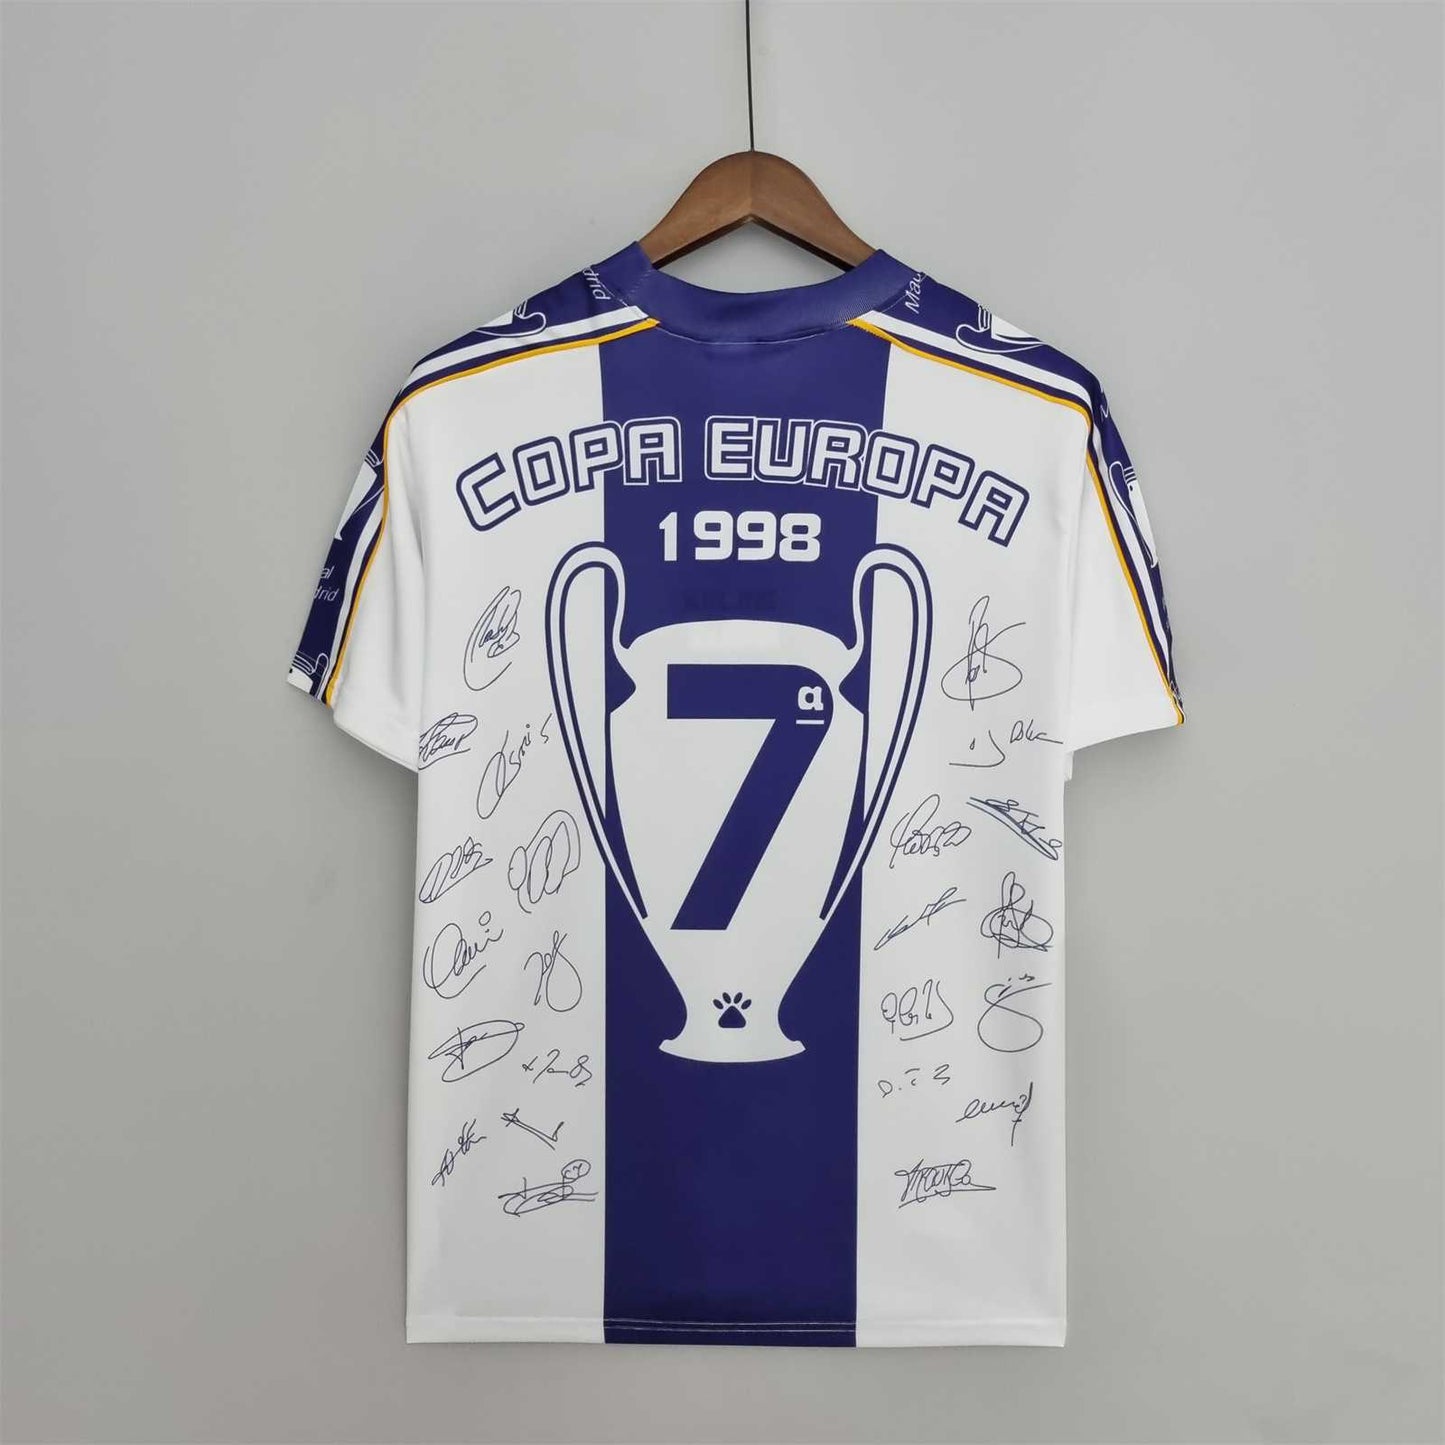 Real Madrid 1997/98 Champions League Winners Shirt